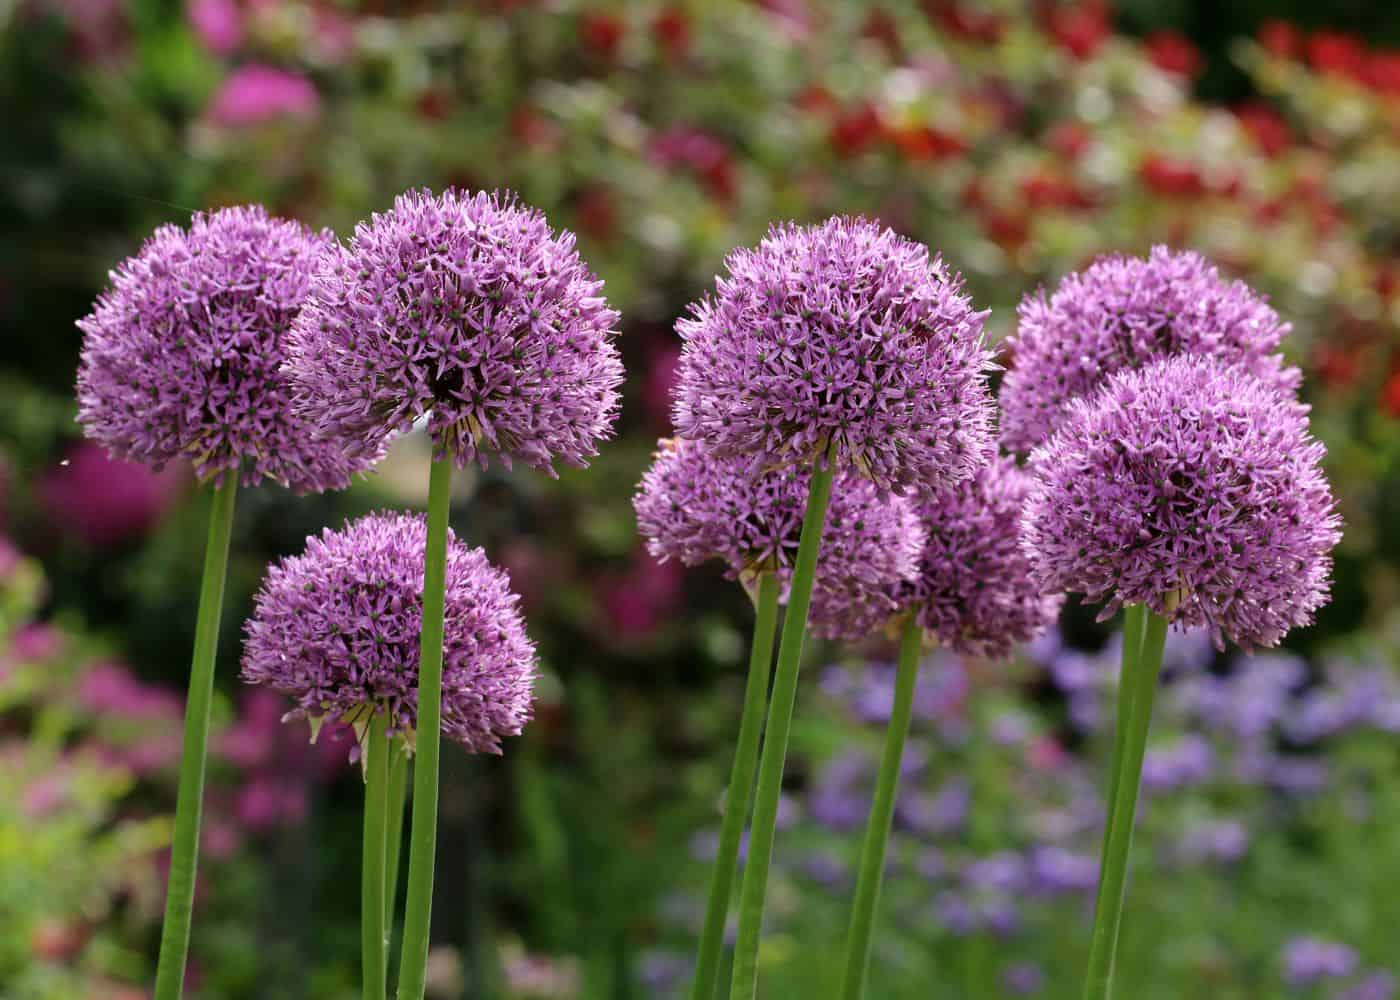 Allium - companion plants for lavender